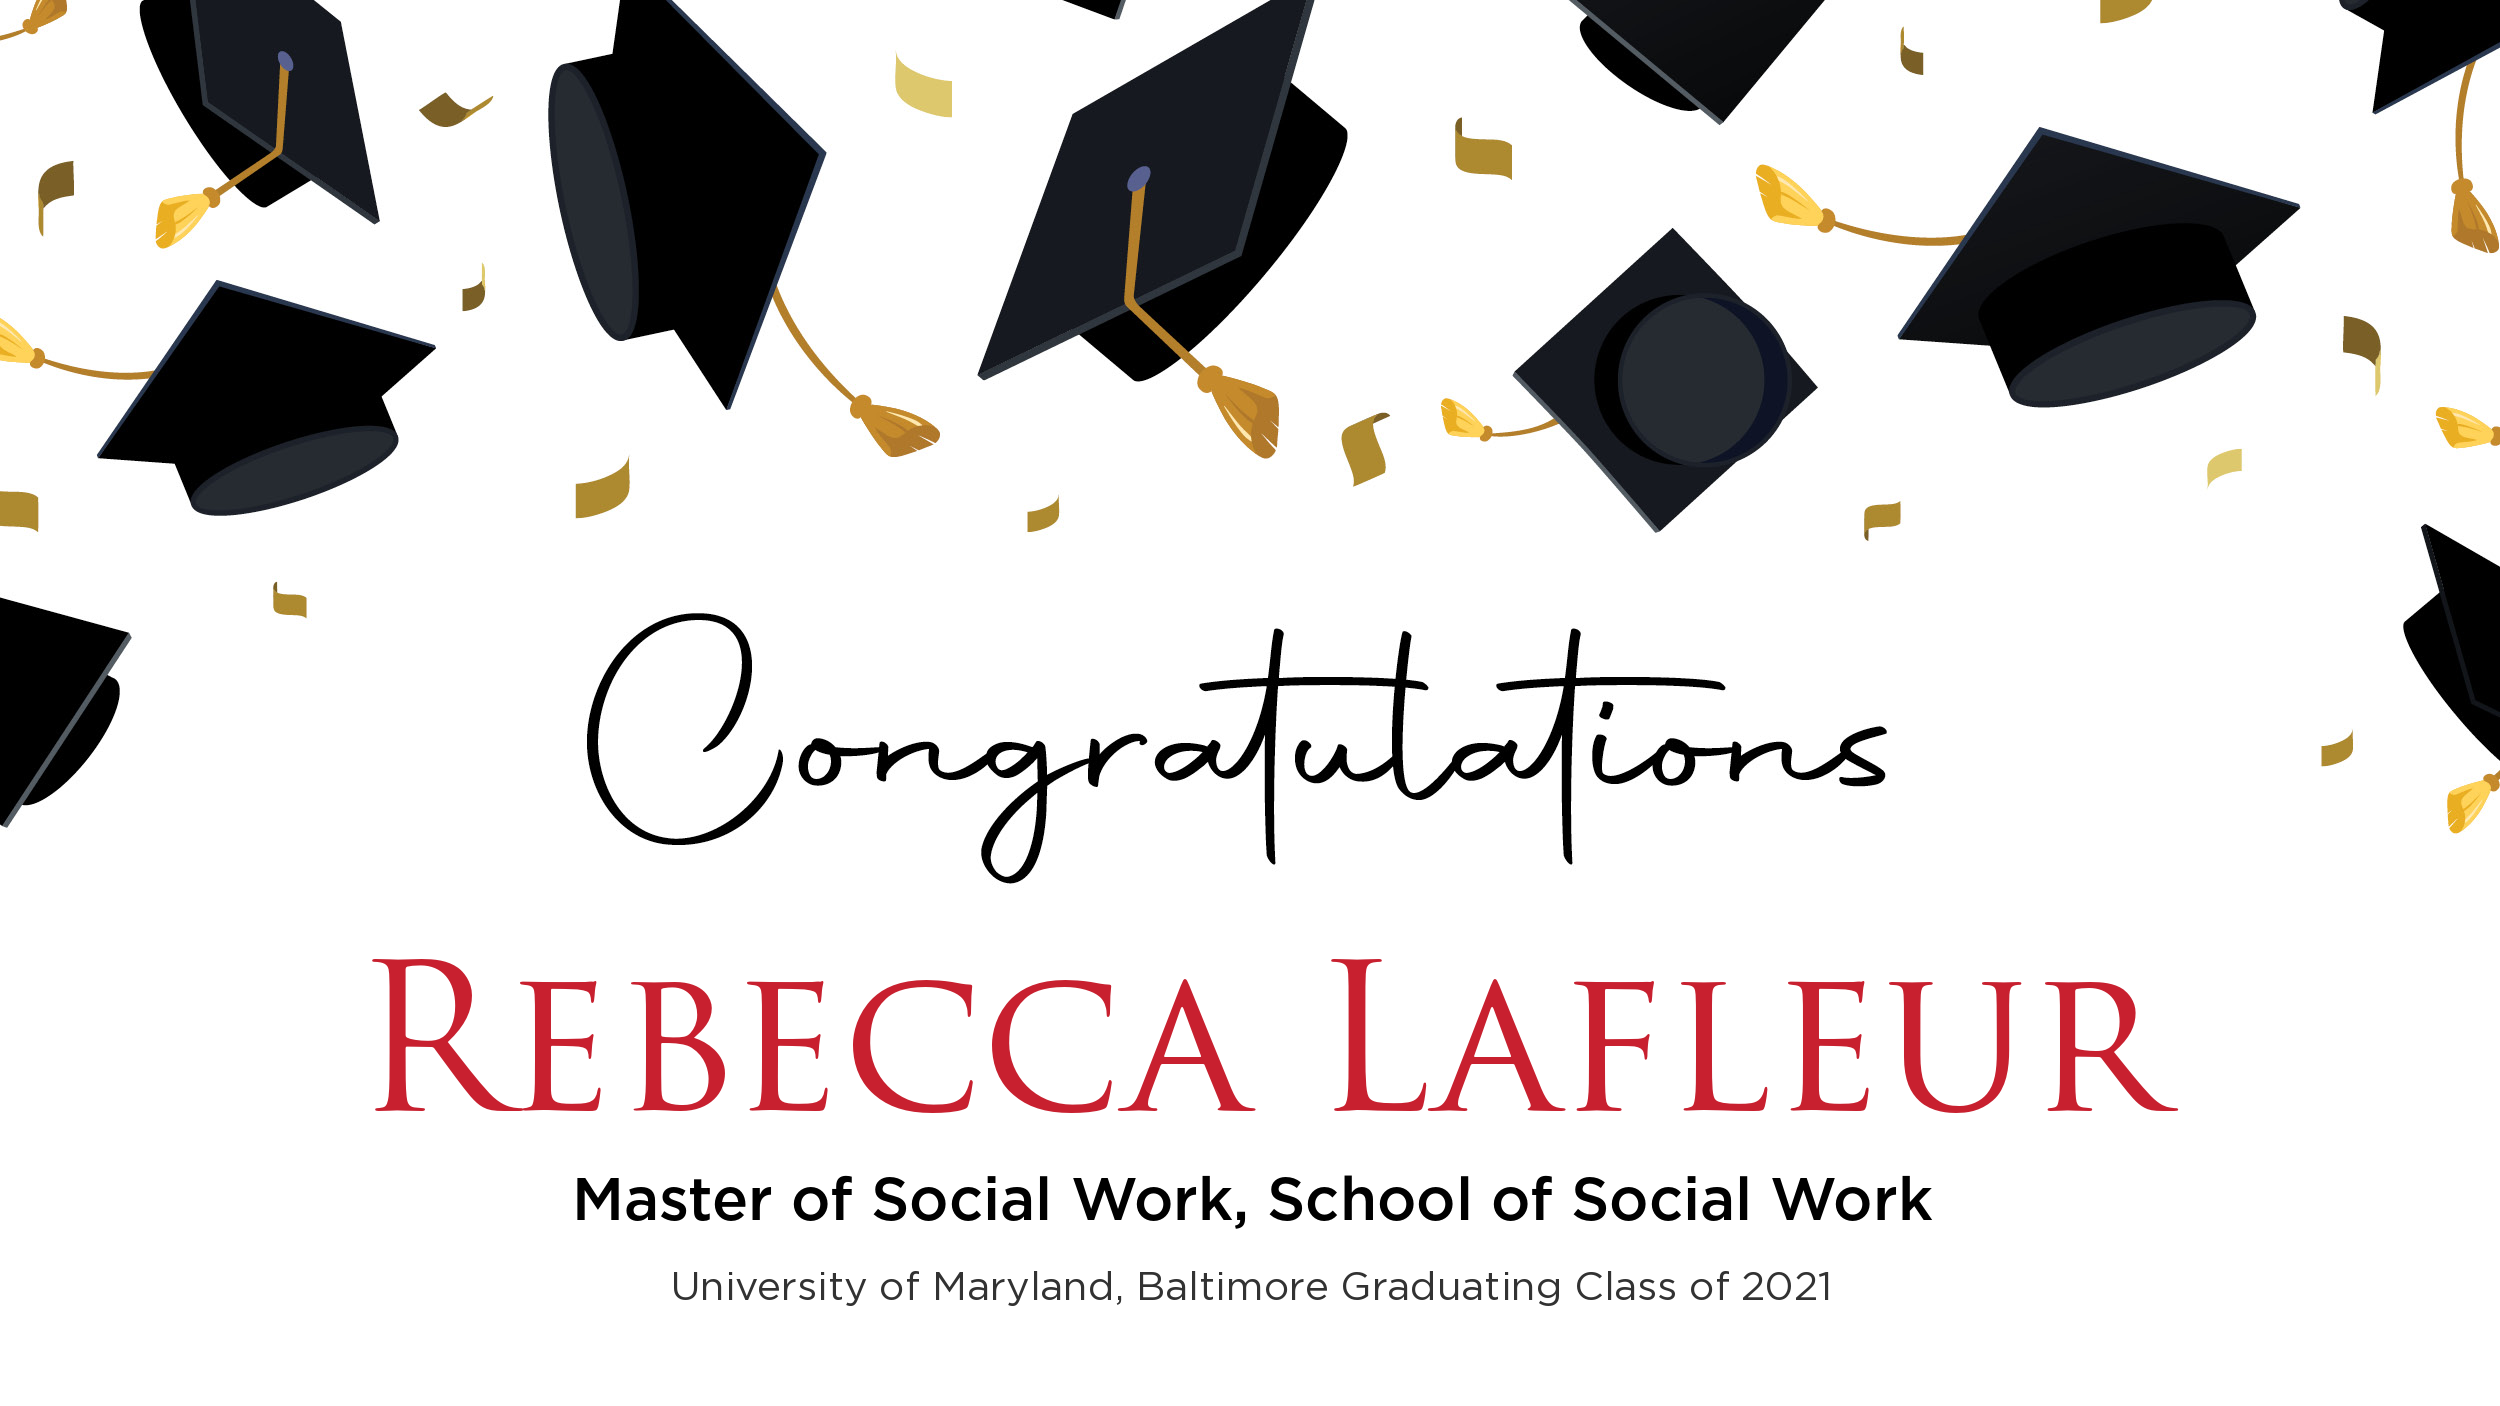 Congratulations Rebecca Lafleur, Master of Social Work